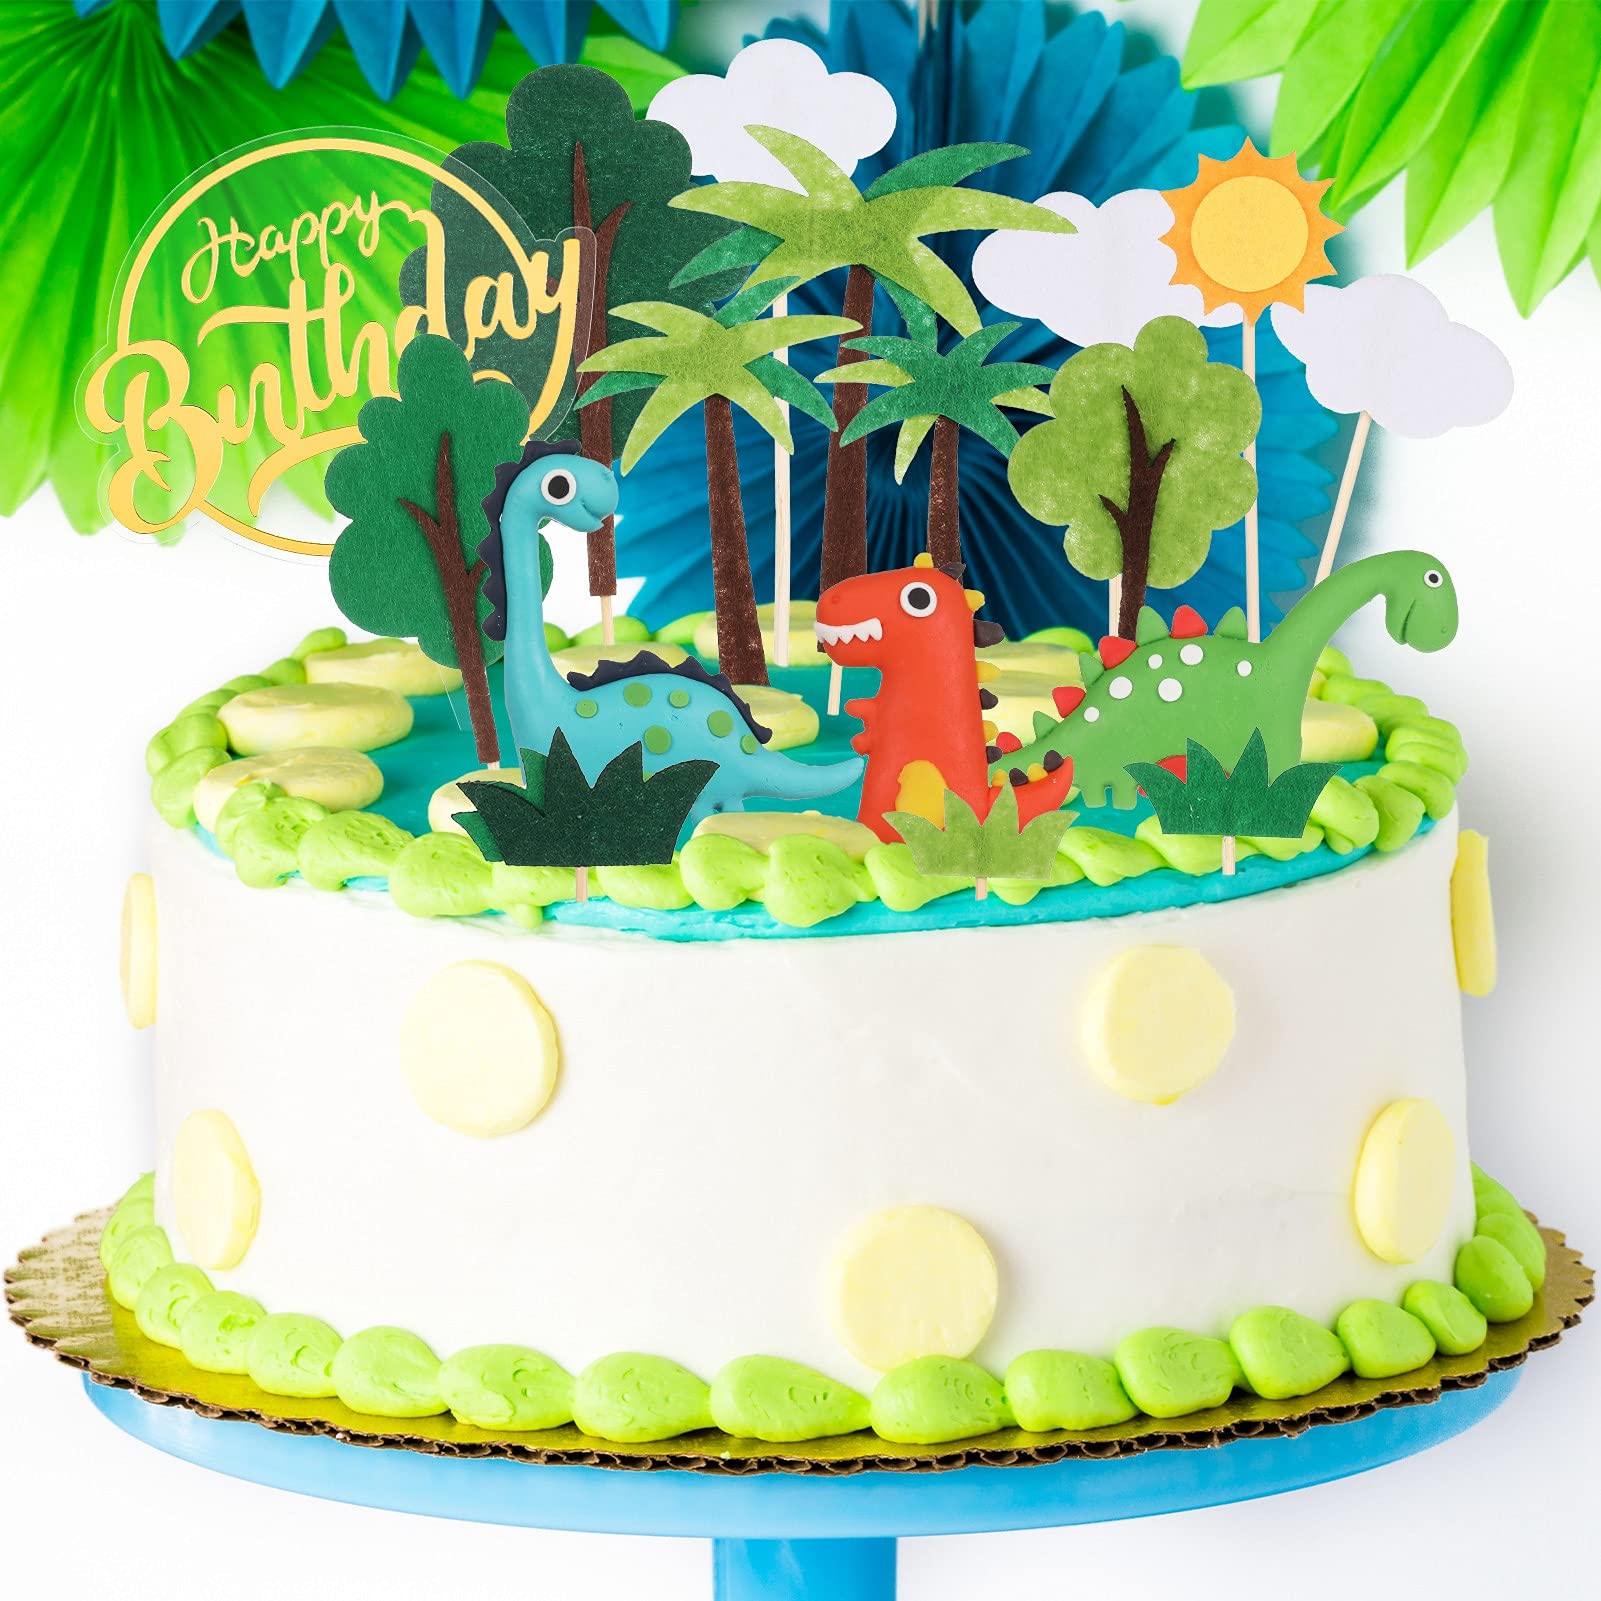 Auidy_6TXD 17 Pcs Dinosaur Cake Topper Cupcake Topper, 3D Cake Decorations Happy Birthday Caker Topper for Dinosaur Theme Boy Girl Kid Birthday Party Supplies